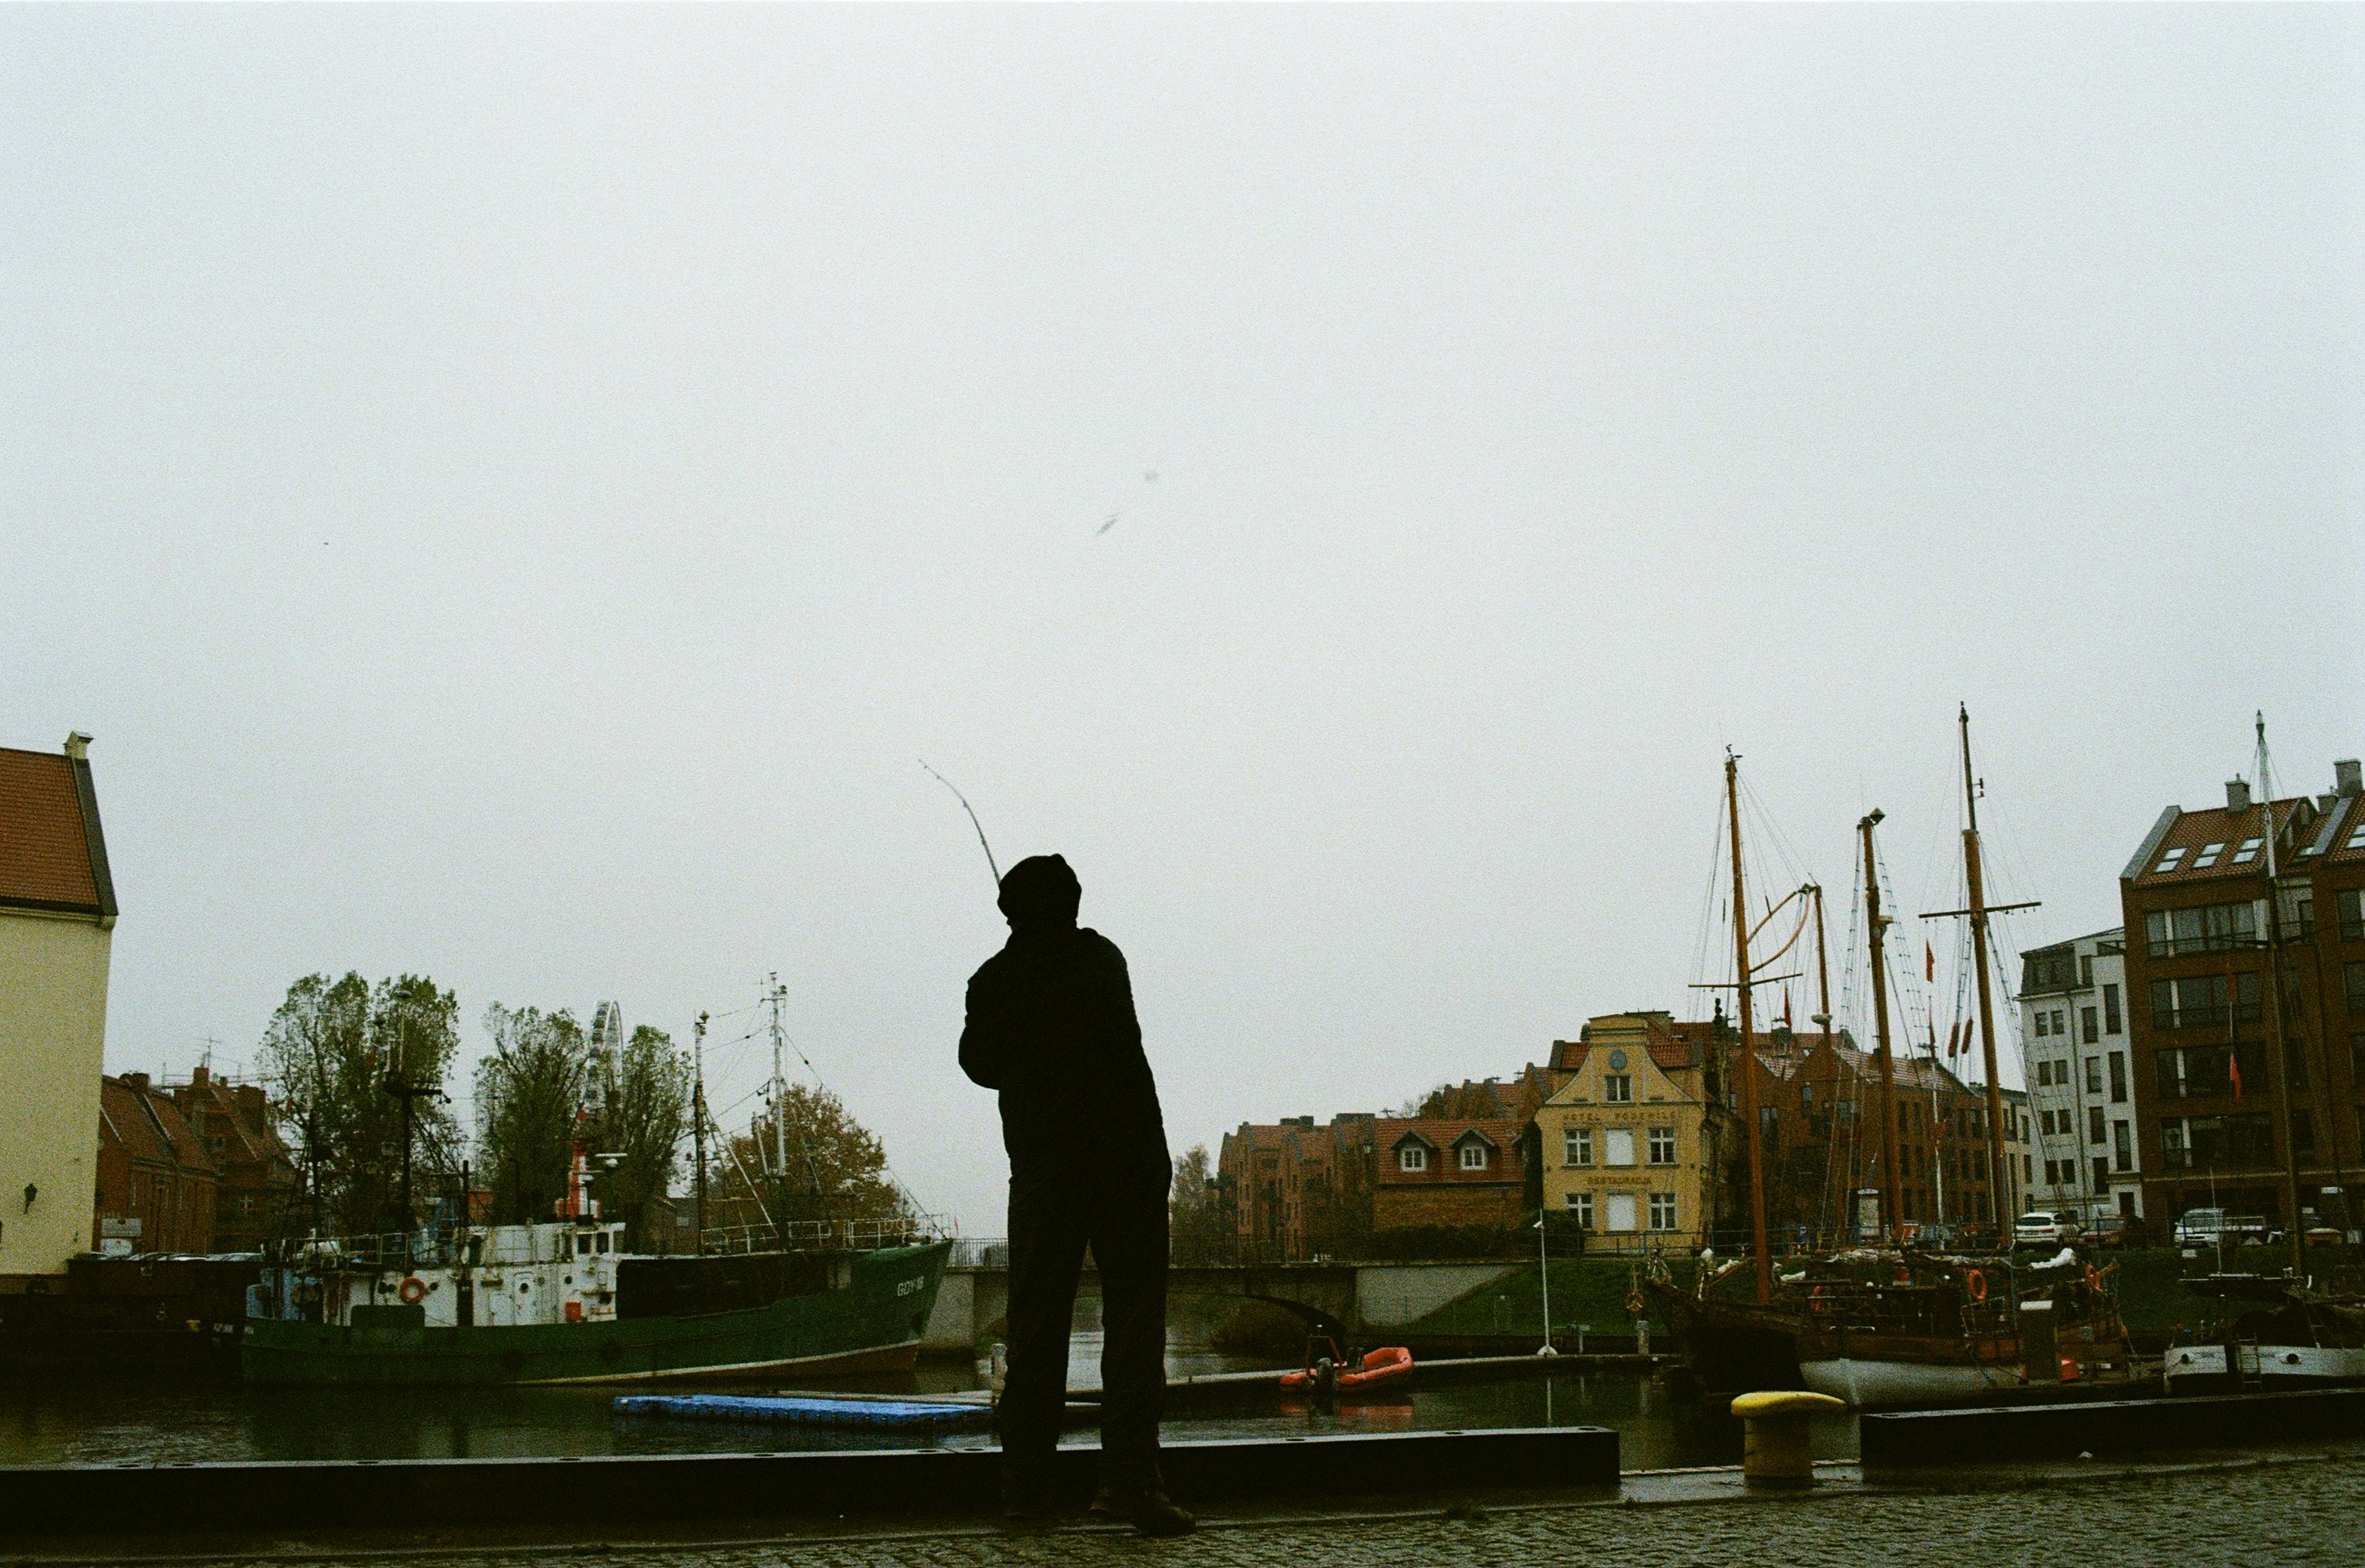 man in black jacket and pants standing on bridge during daytime